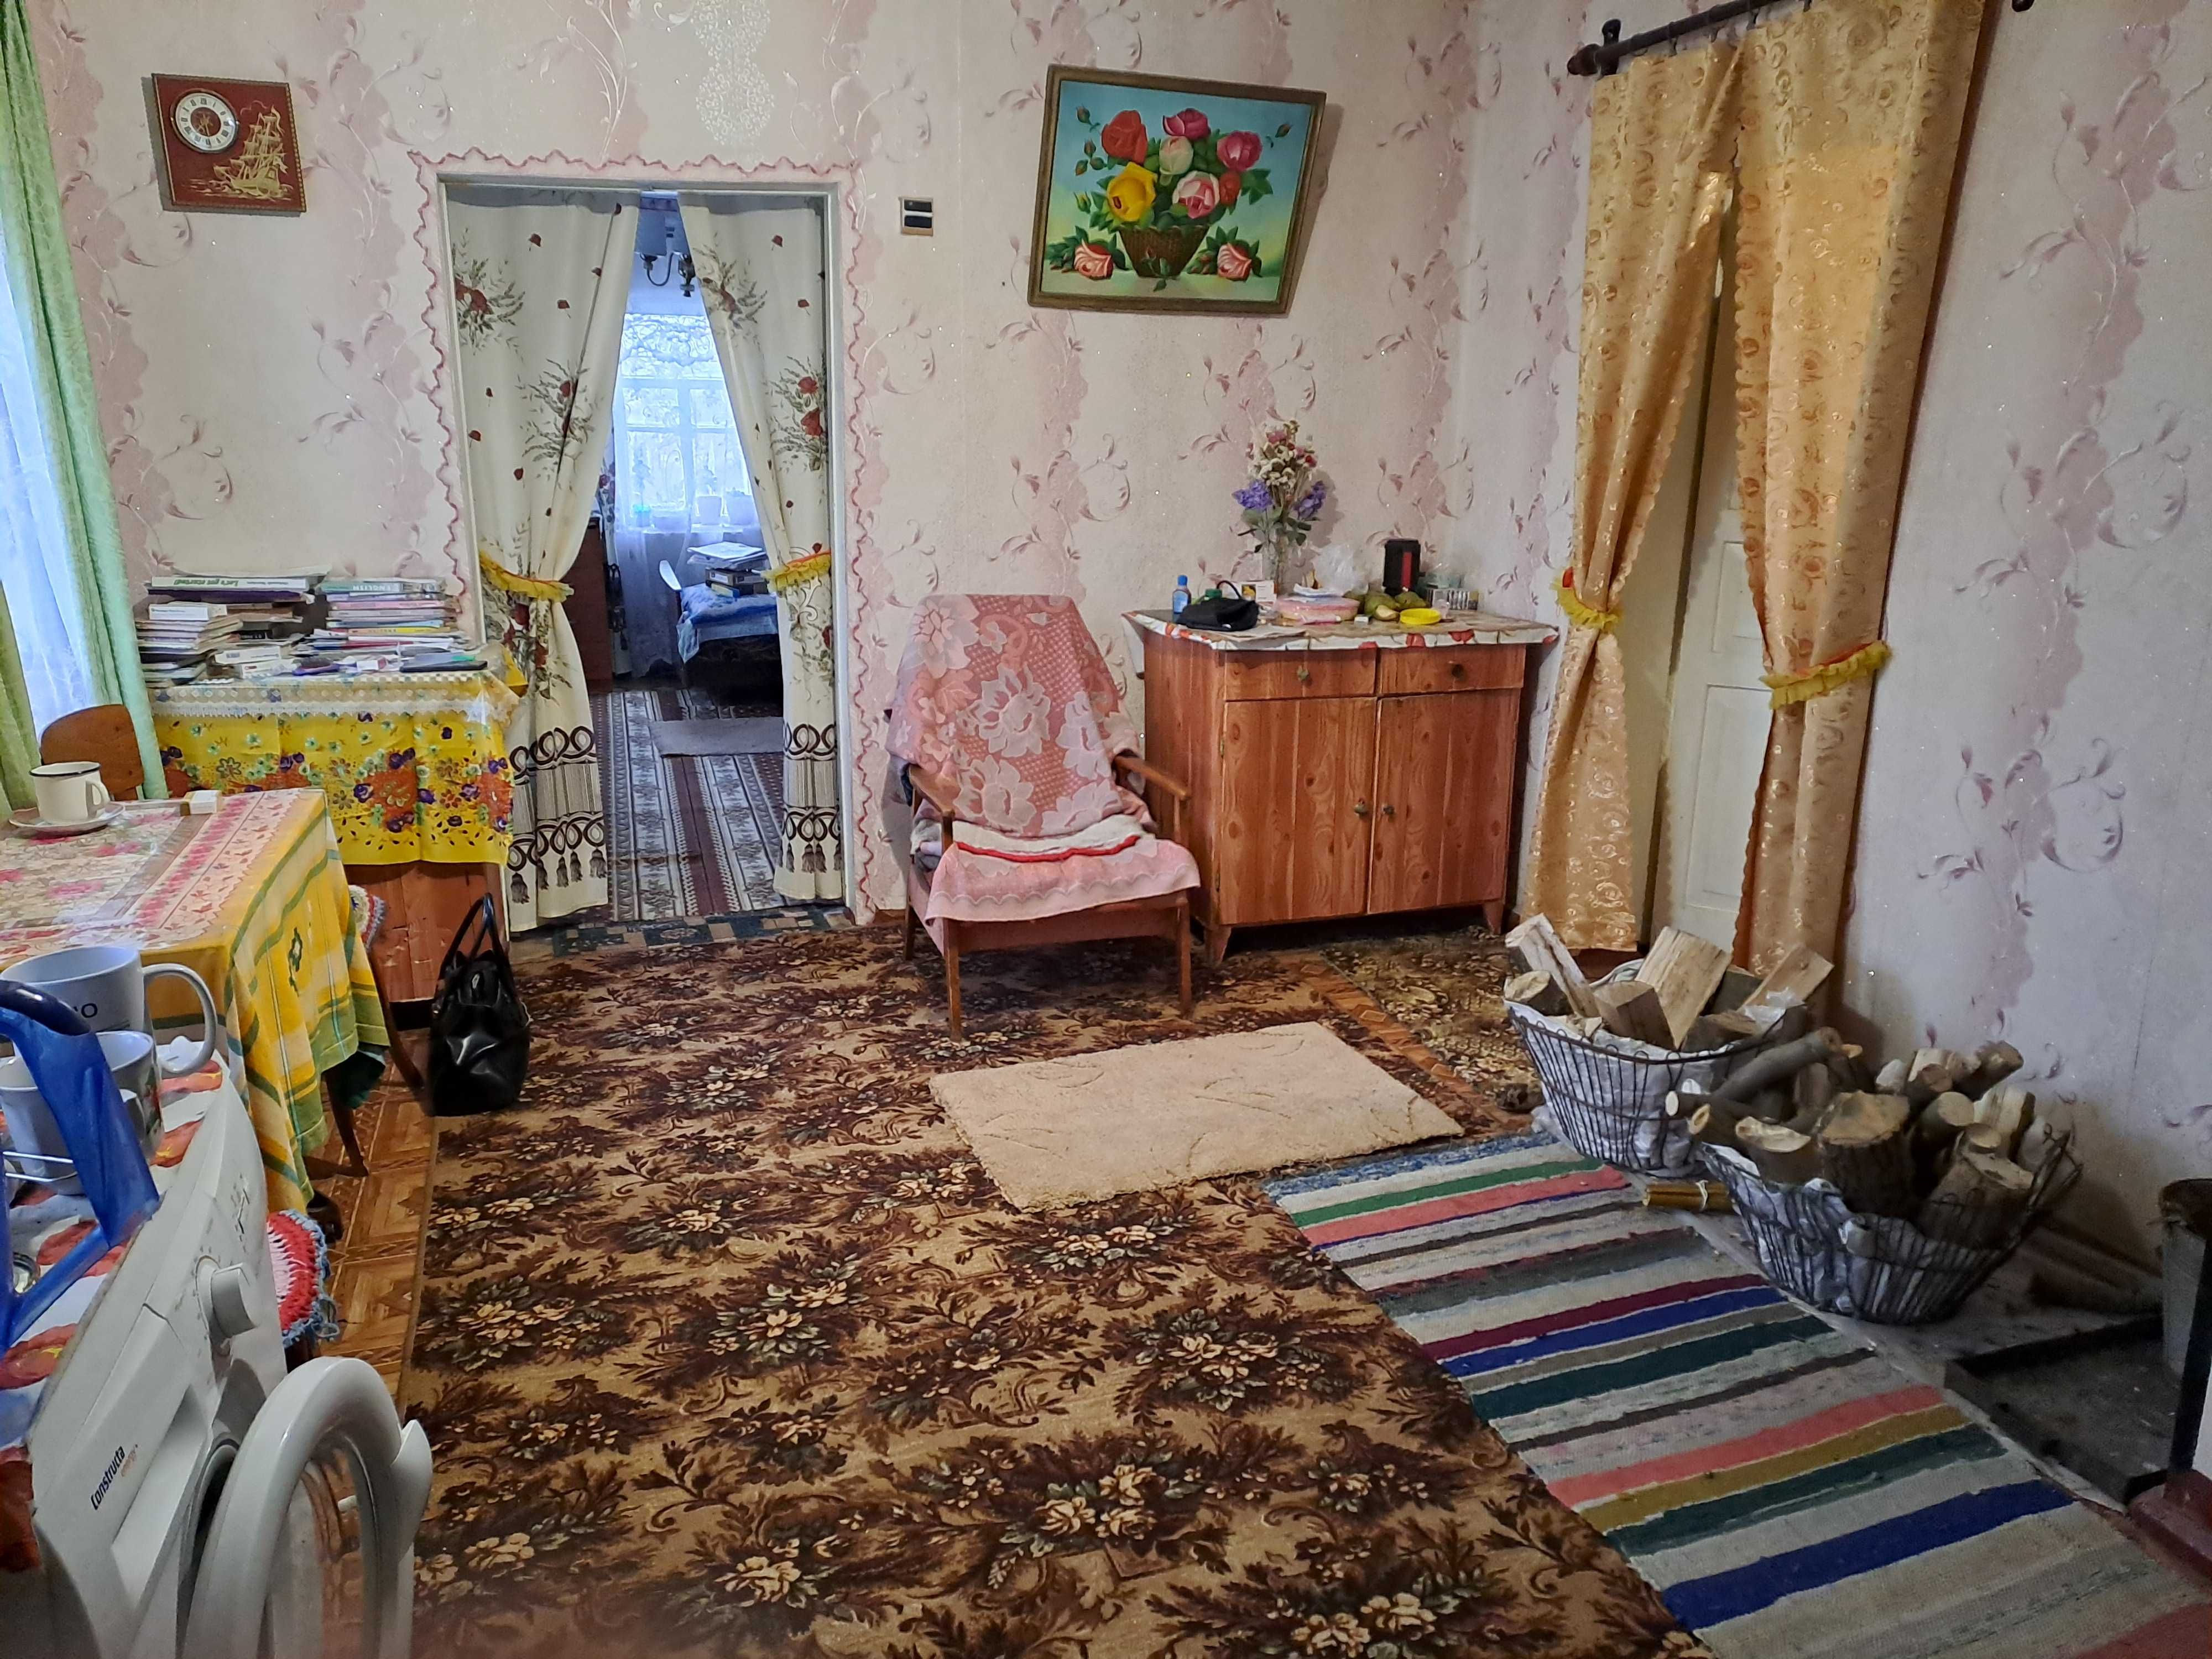 Продам будинок в Обознівці, Кременчуцький р-н, Полтавська область